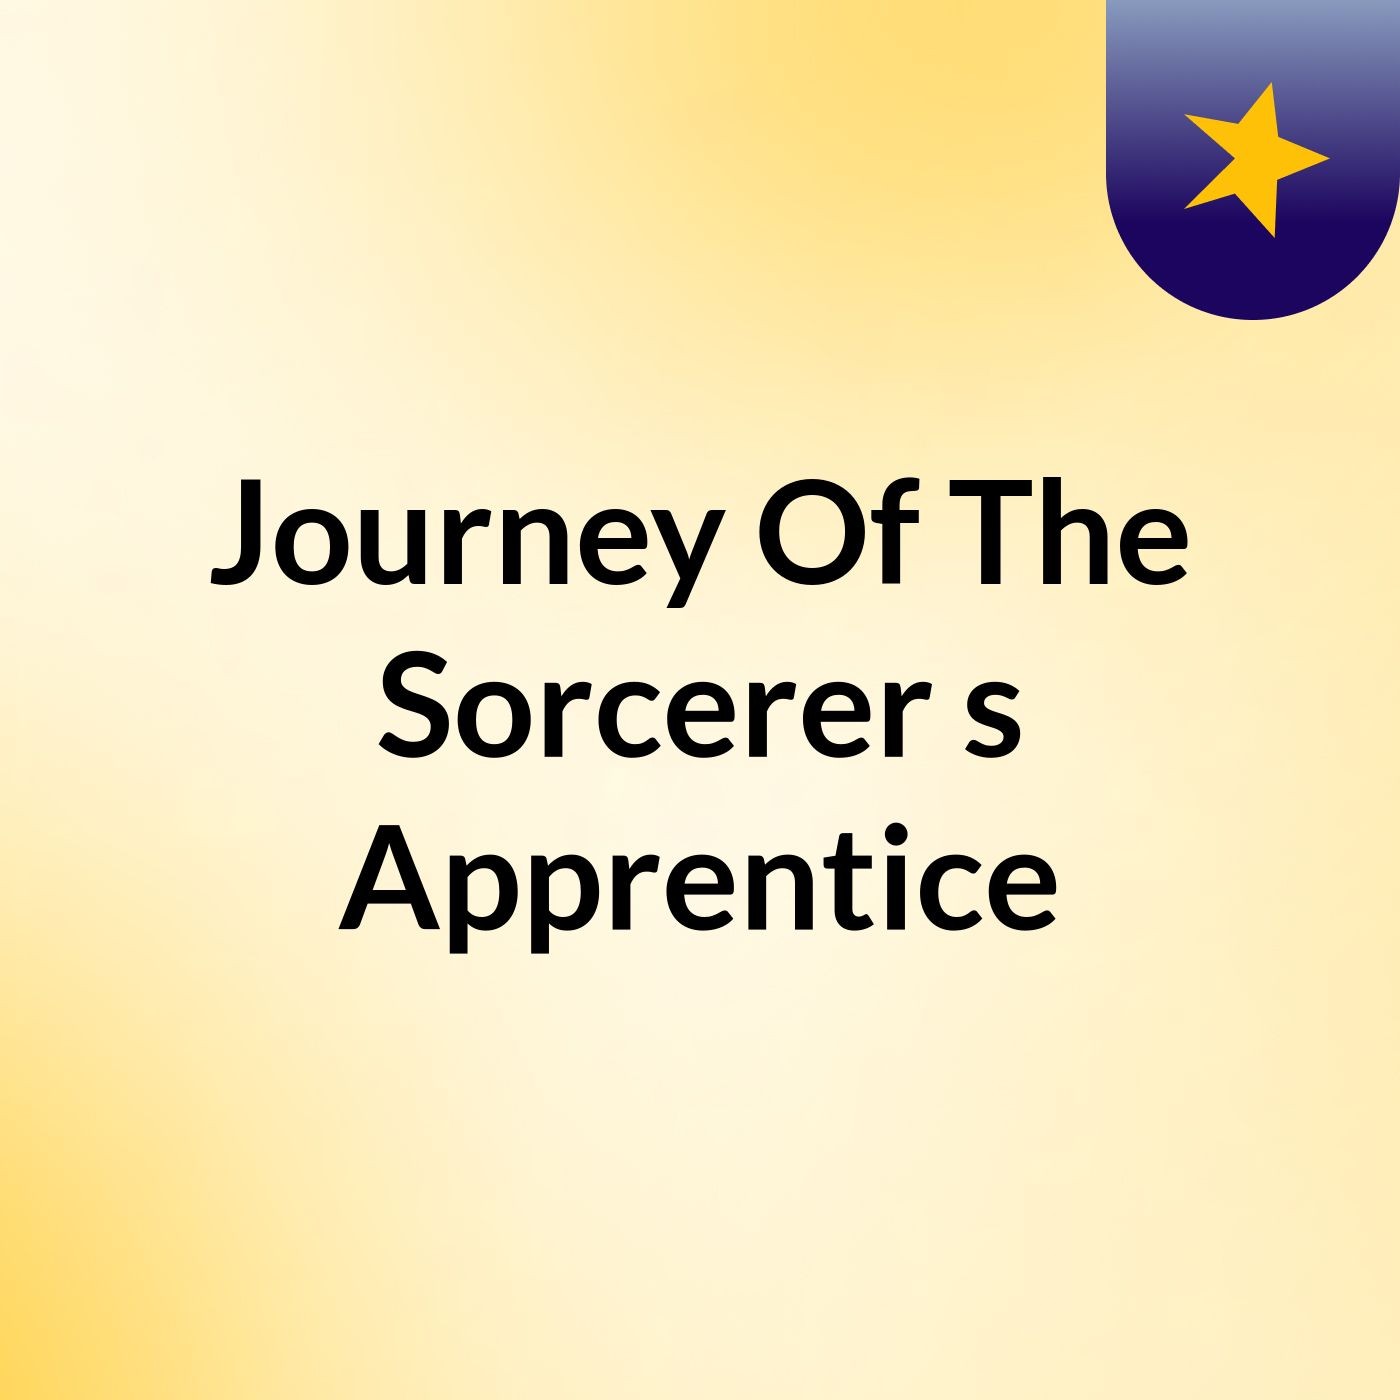 Journey Of The Sorcerer's Apprentice